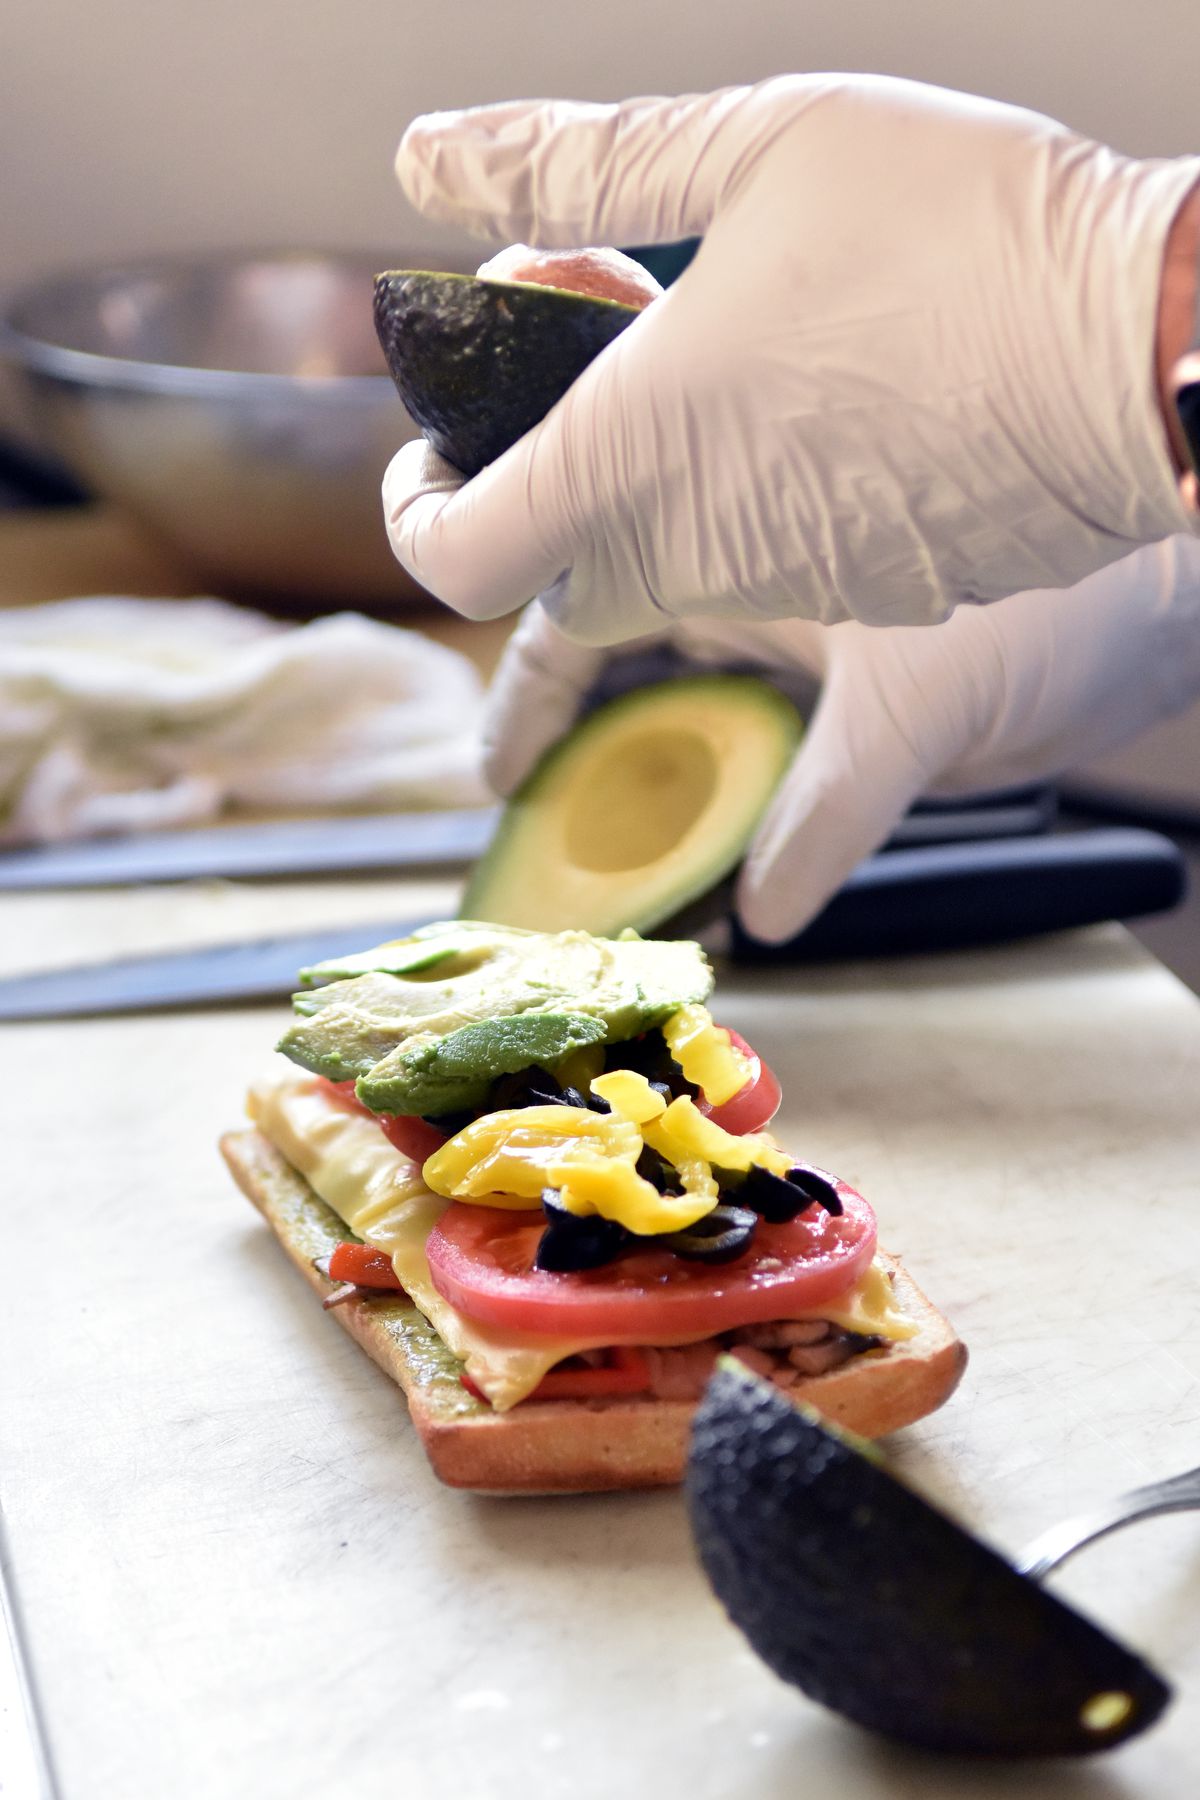 Cutting avocado over a sandwich. 